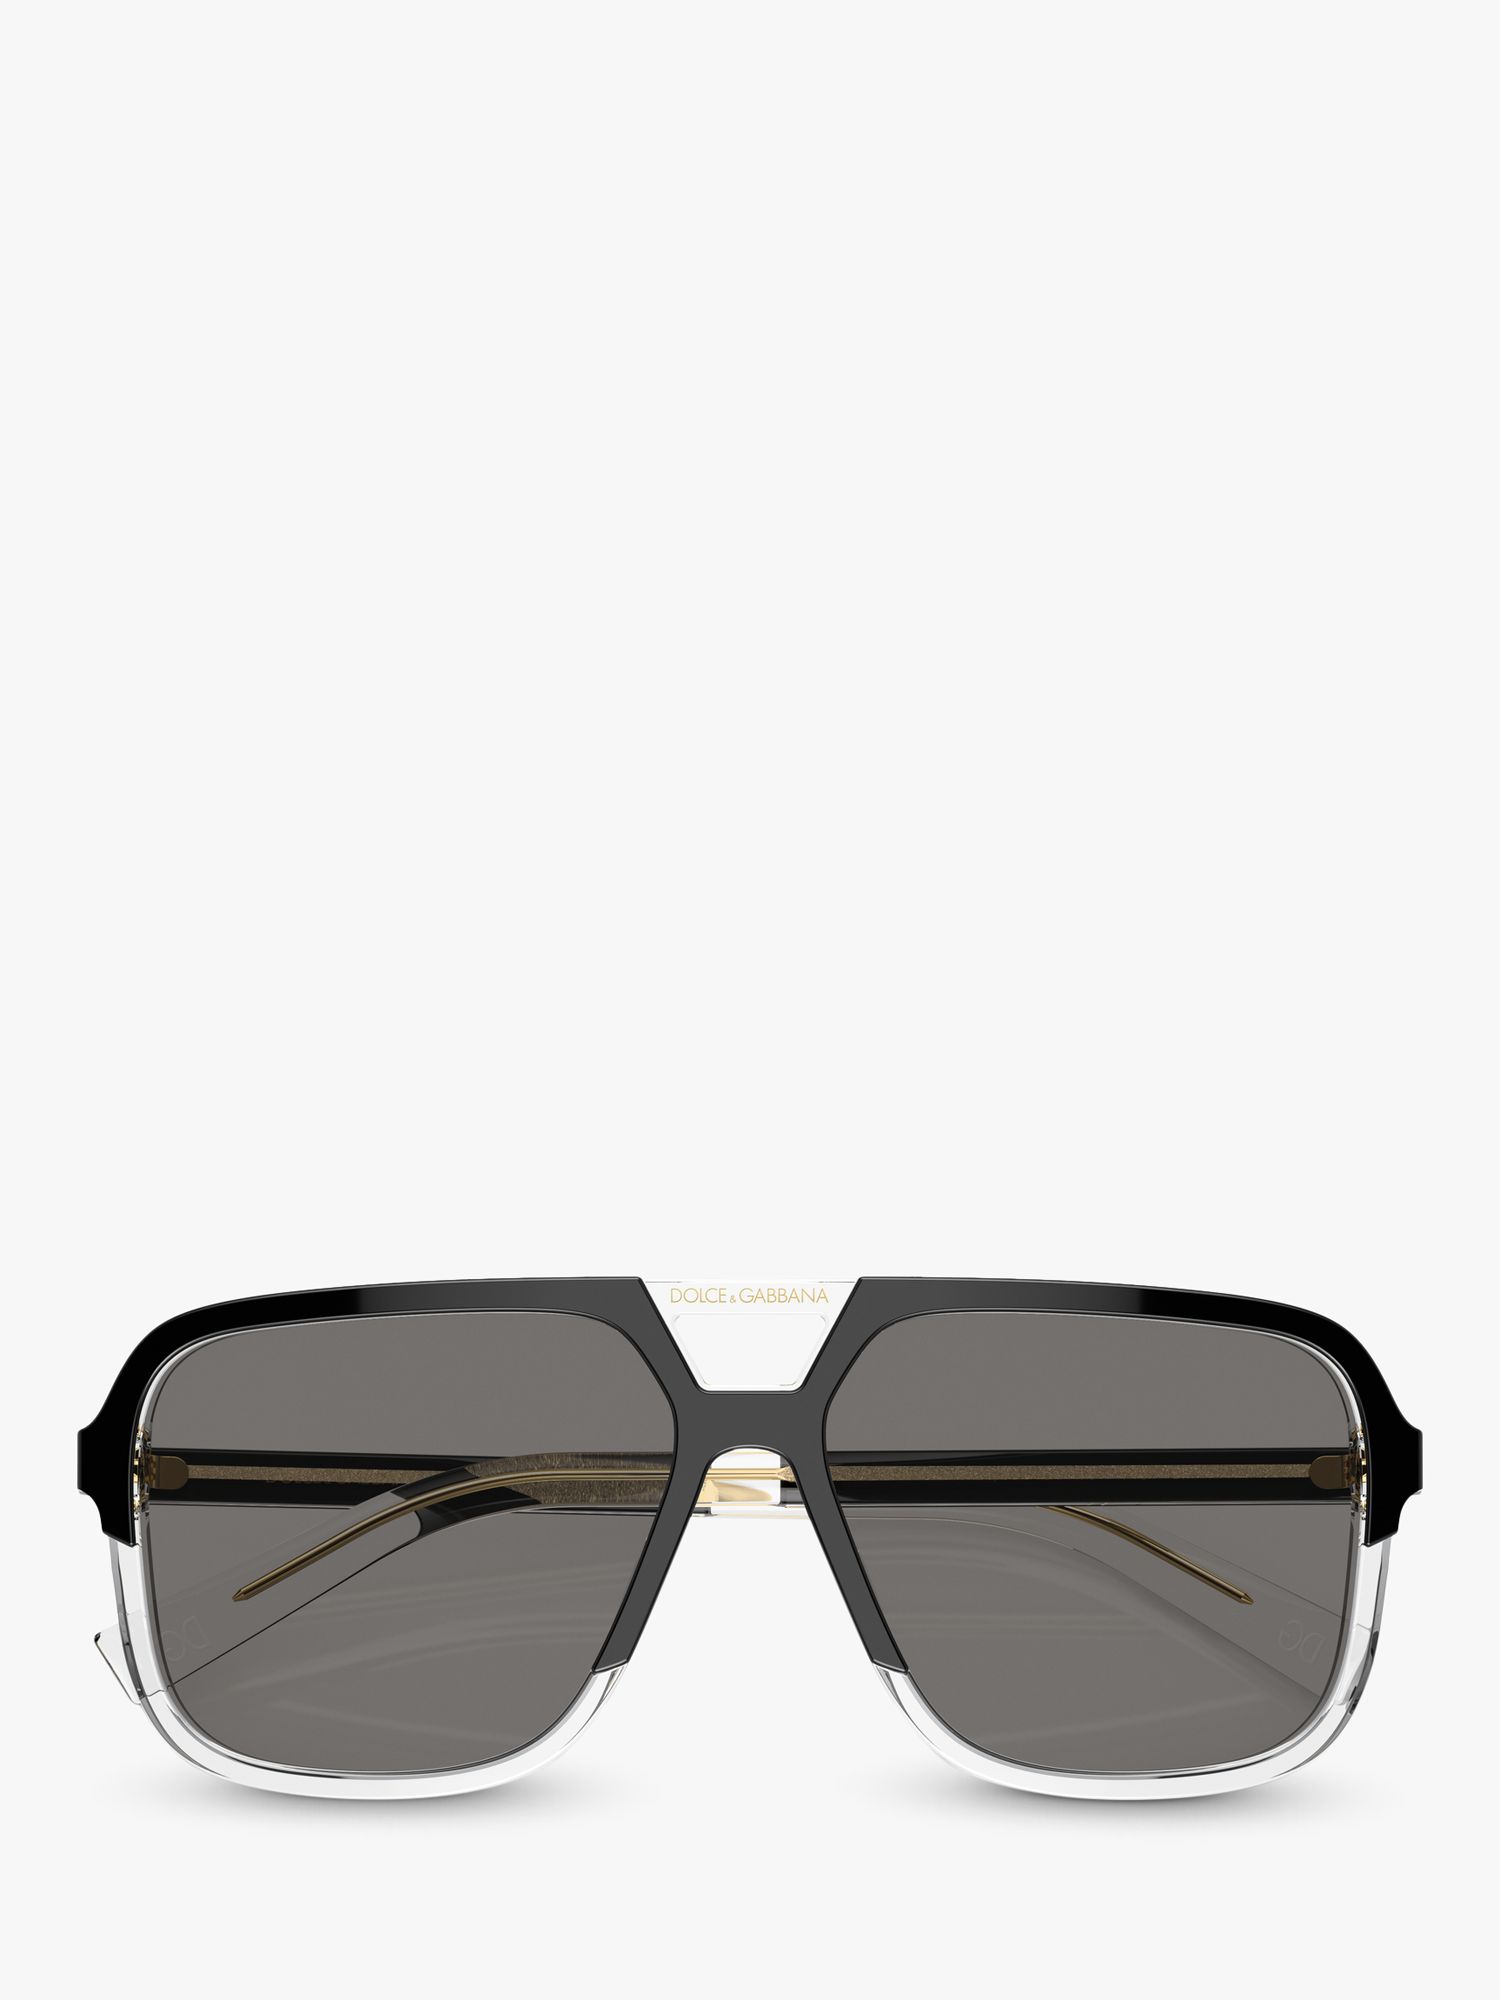 Dolce & Gabbana DG4354 Men's Polarised Square Sunglasses, Black Clear ...